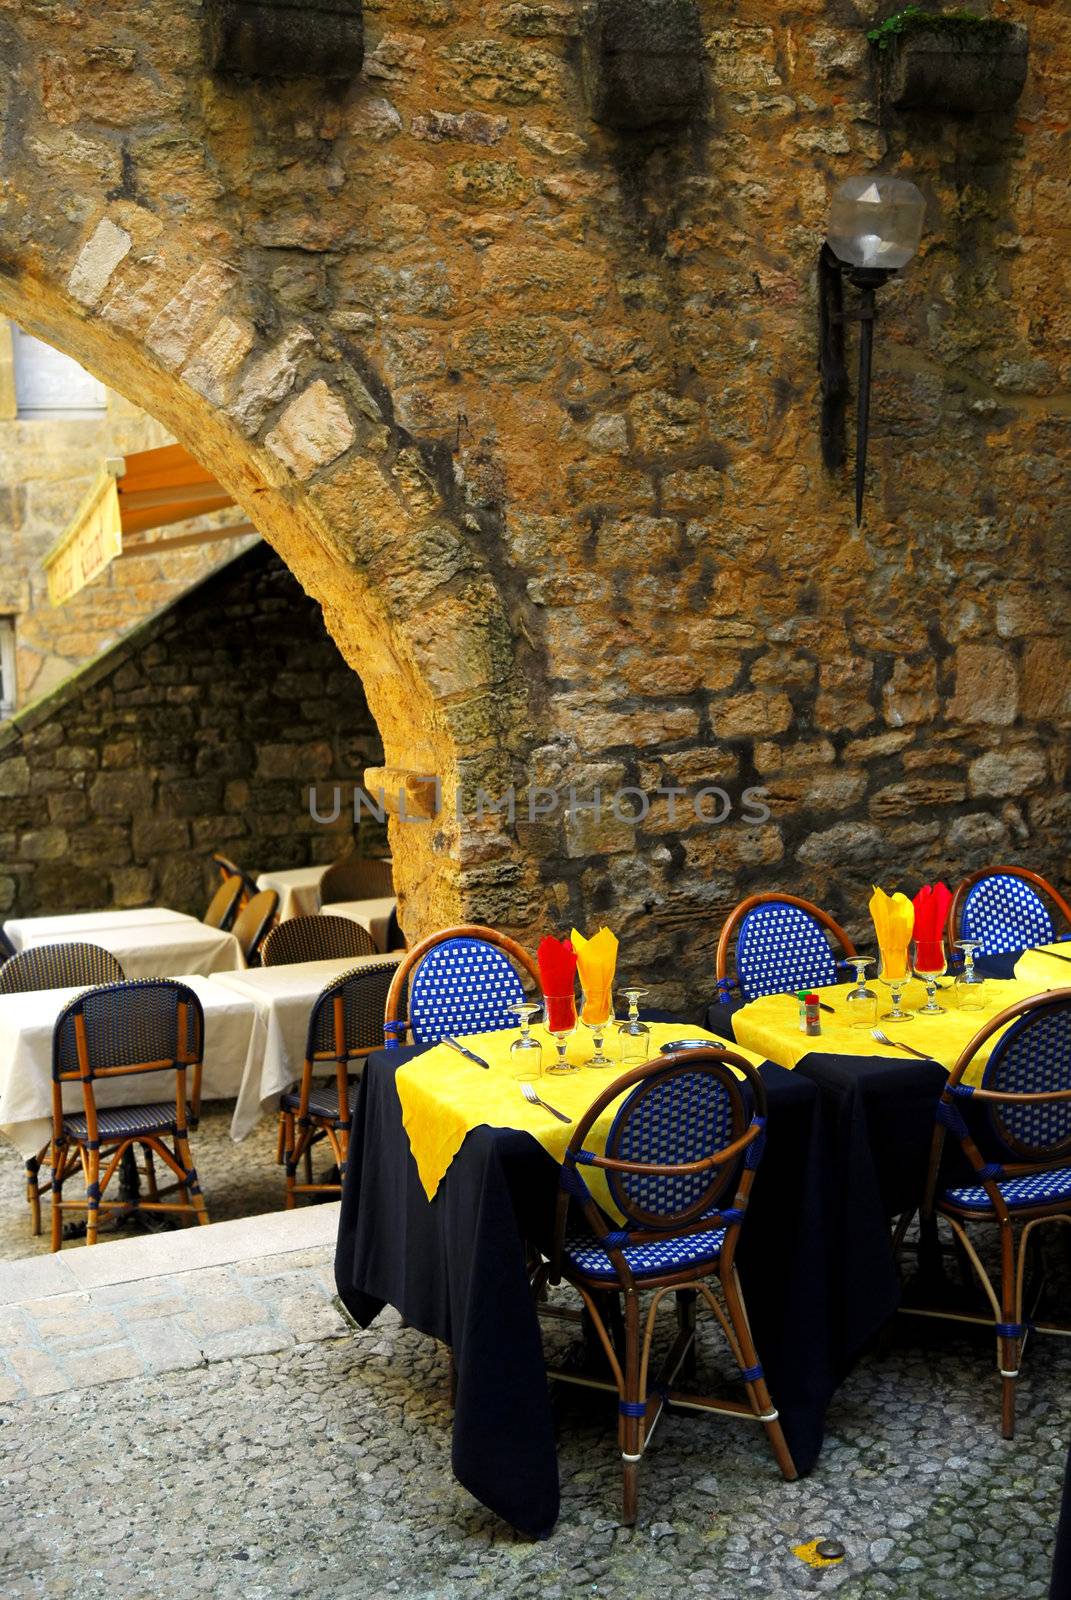 Restaurant patio among medieval walls in Sarlat, Dordogne region, France